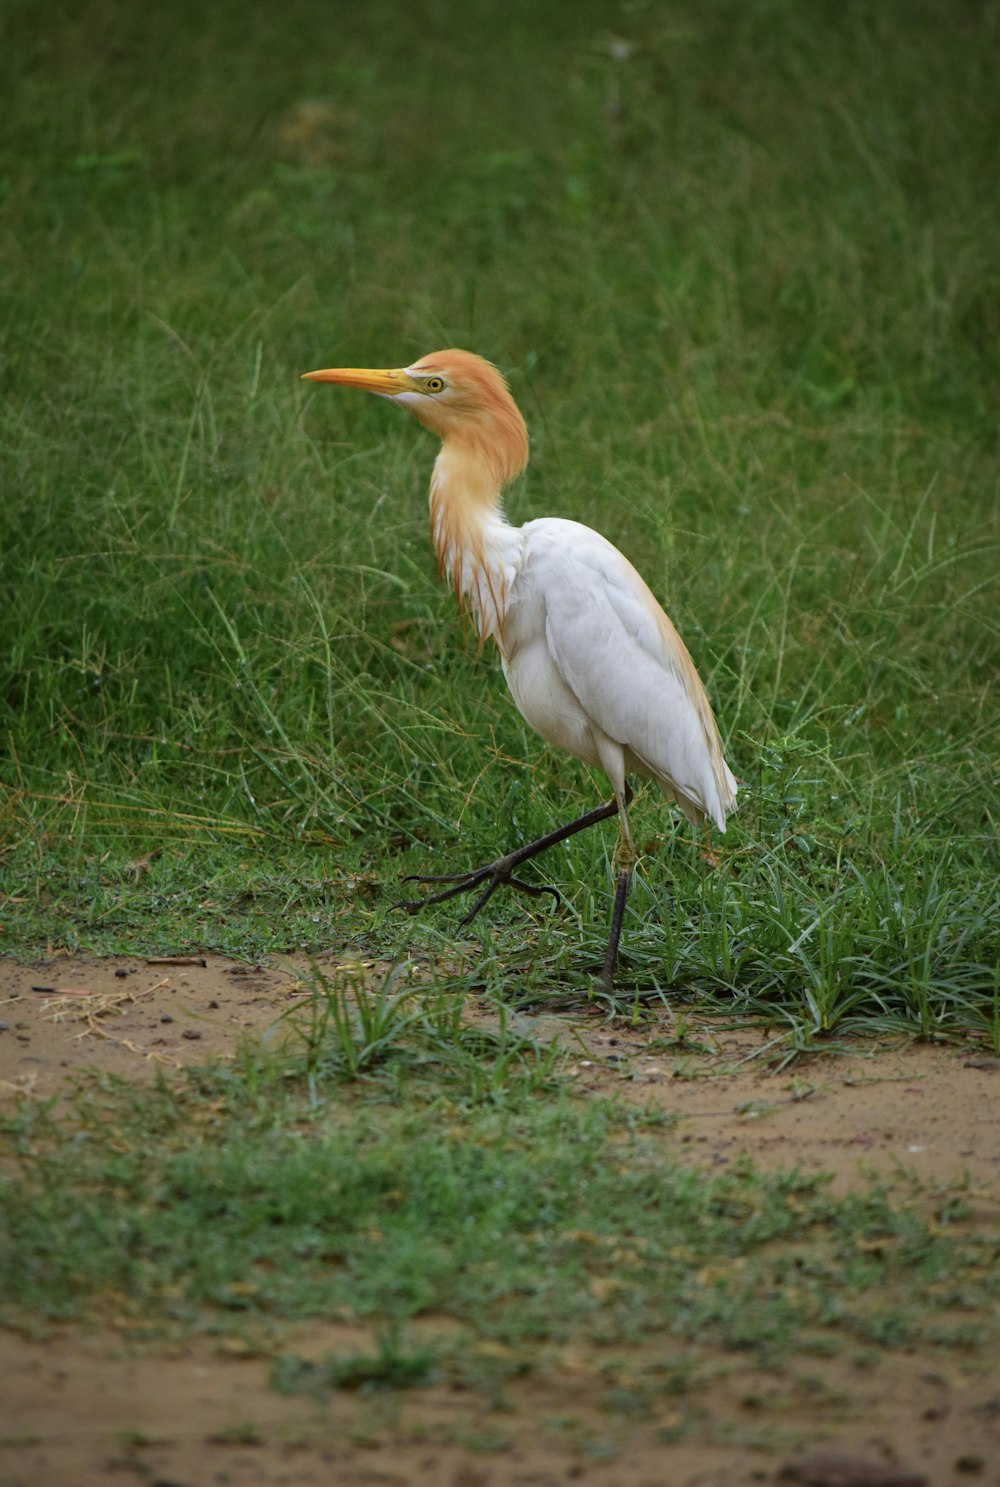 white stork on green grass field during daytime